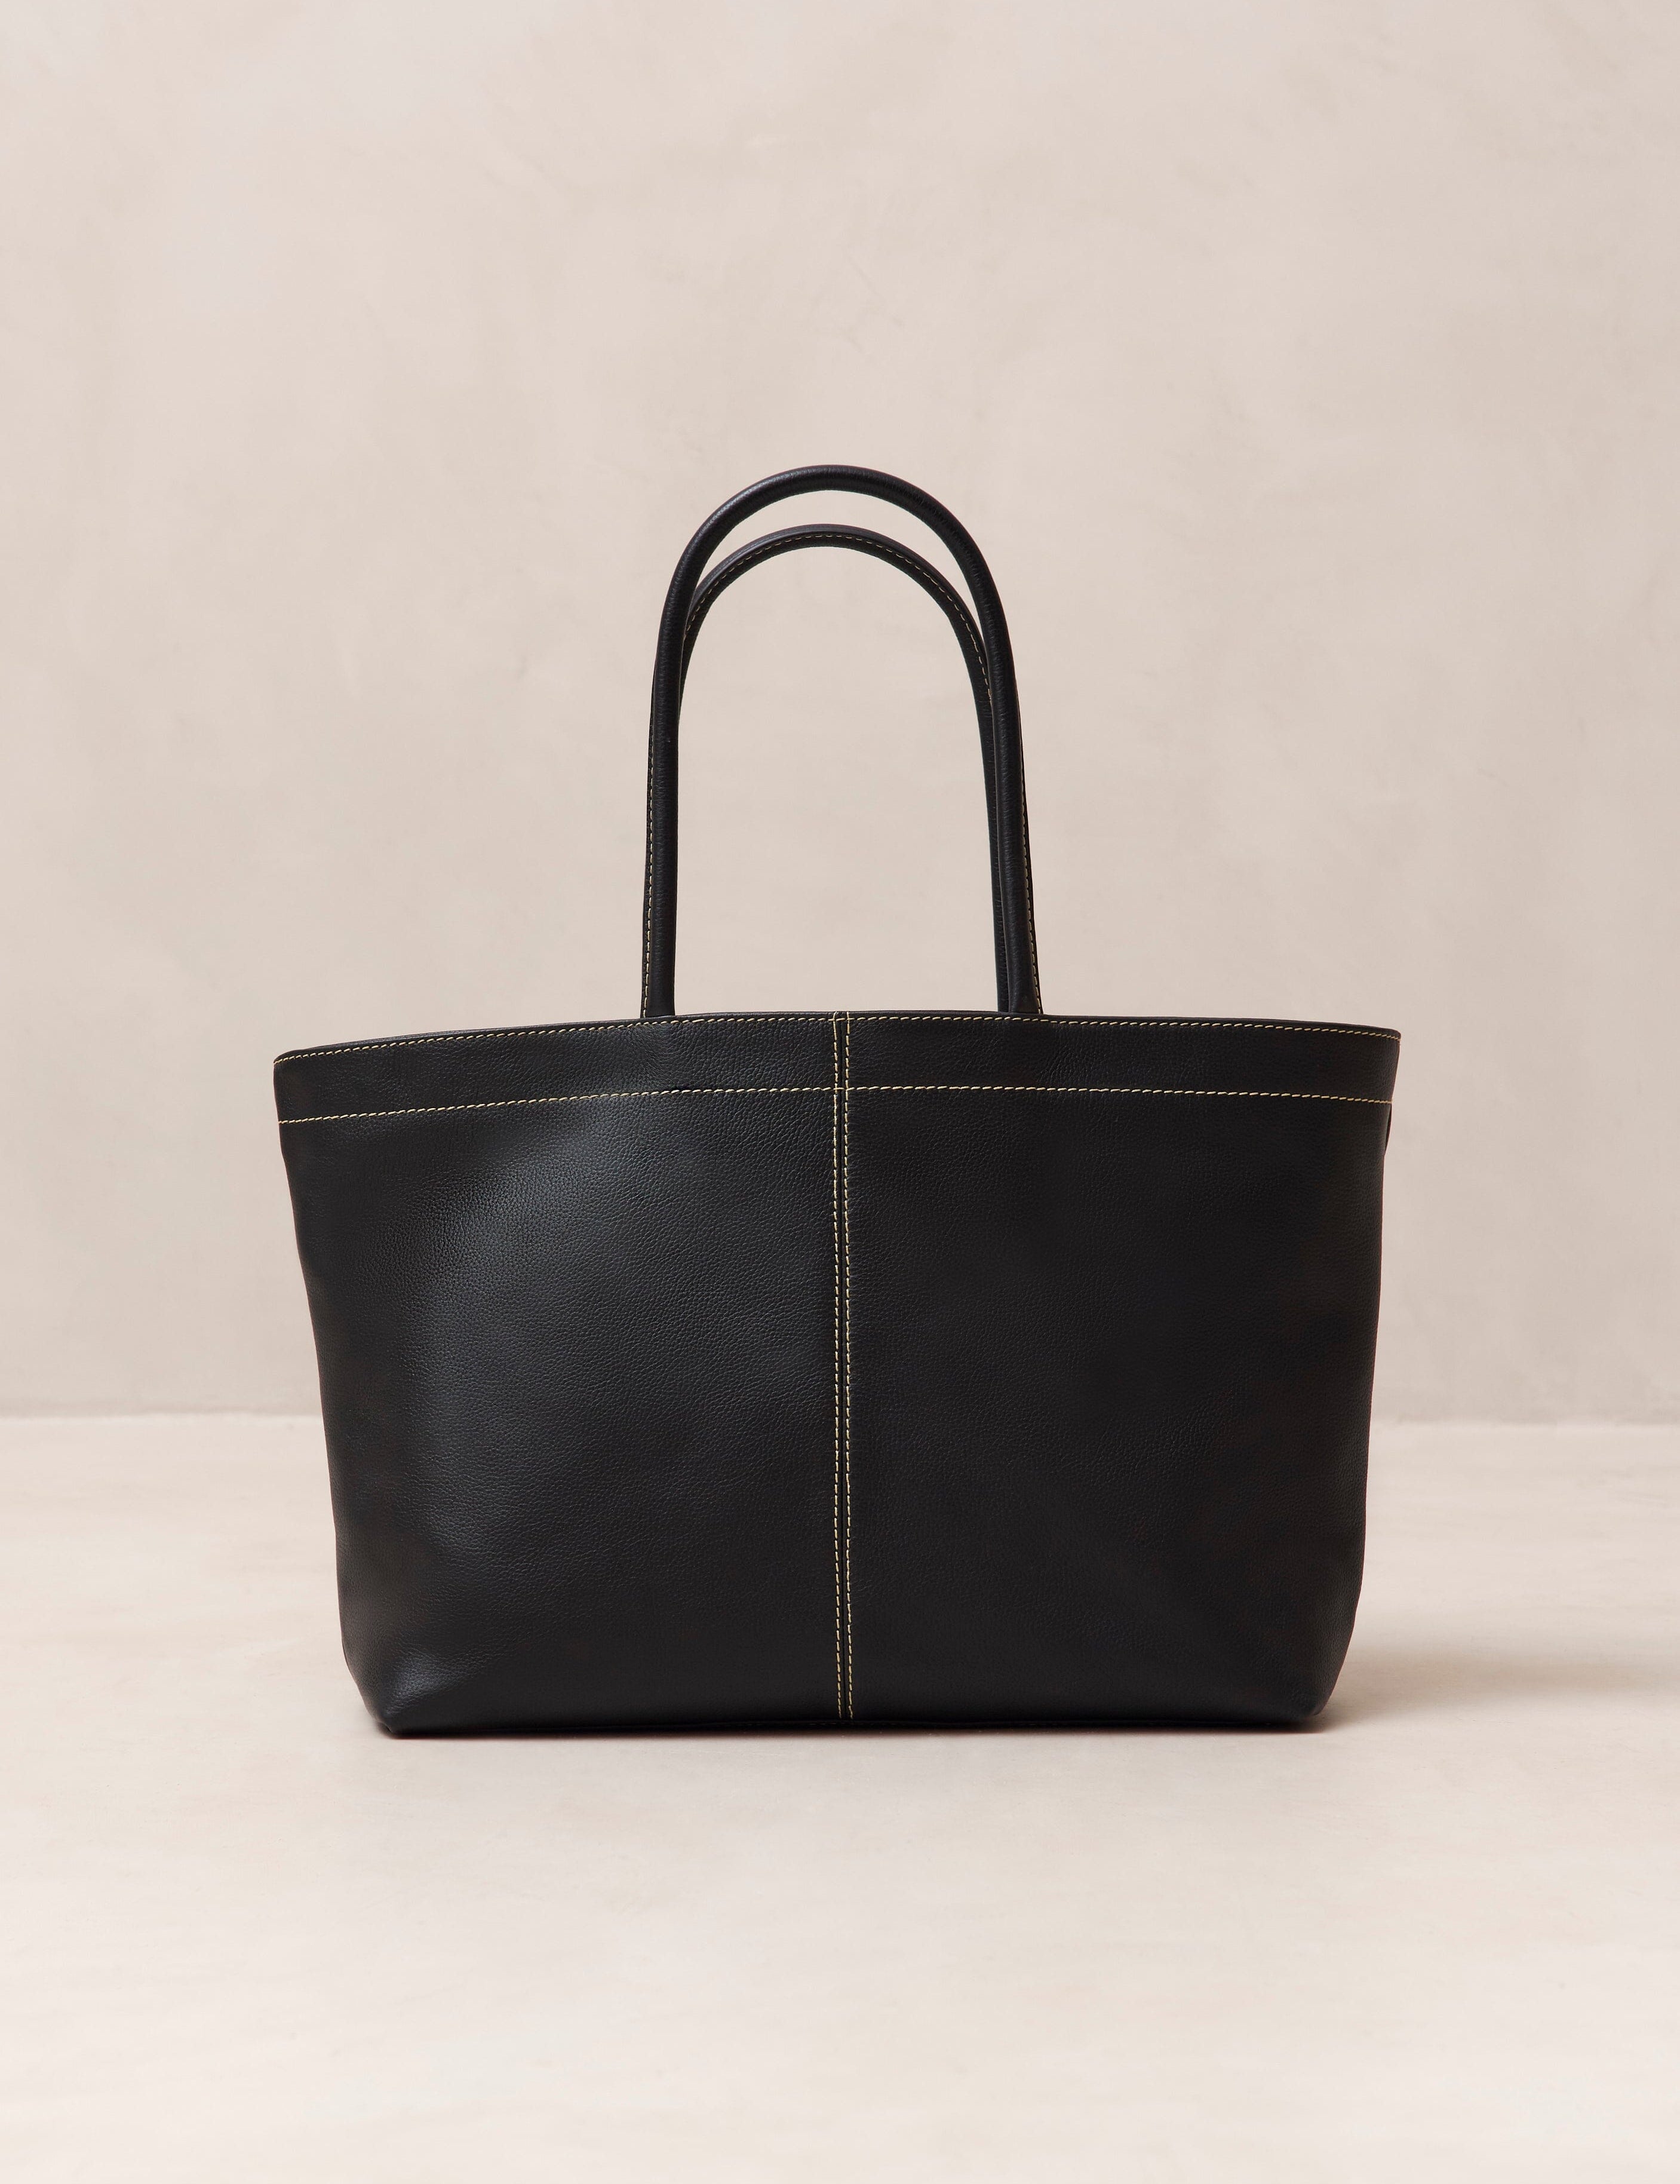 the-f-black-leather-tote-bags-handbags-alohas-608208_3000x_195745a8-6e7c-4717-a645-4cddd3475ef5.jpg